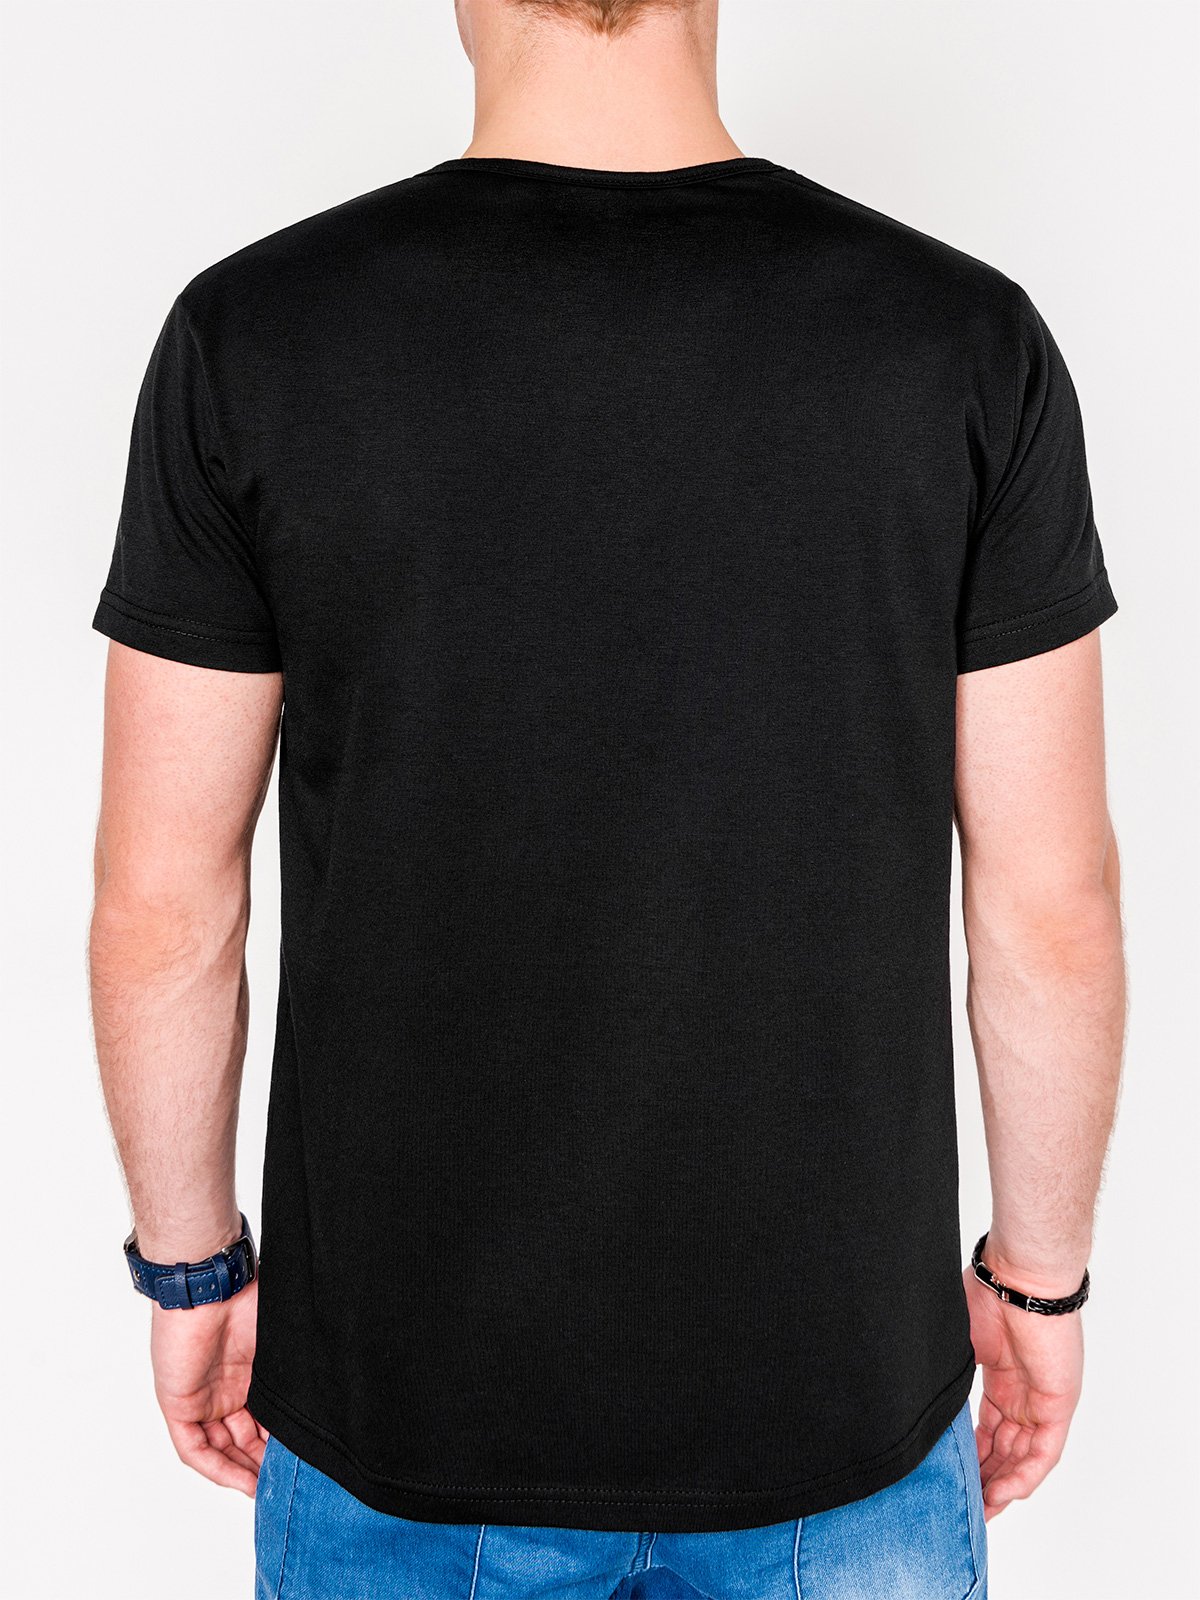 Men's printed t-shirt S1096 - black | MODONE wholesale - Clothing For Men